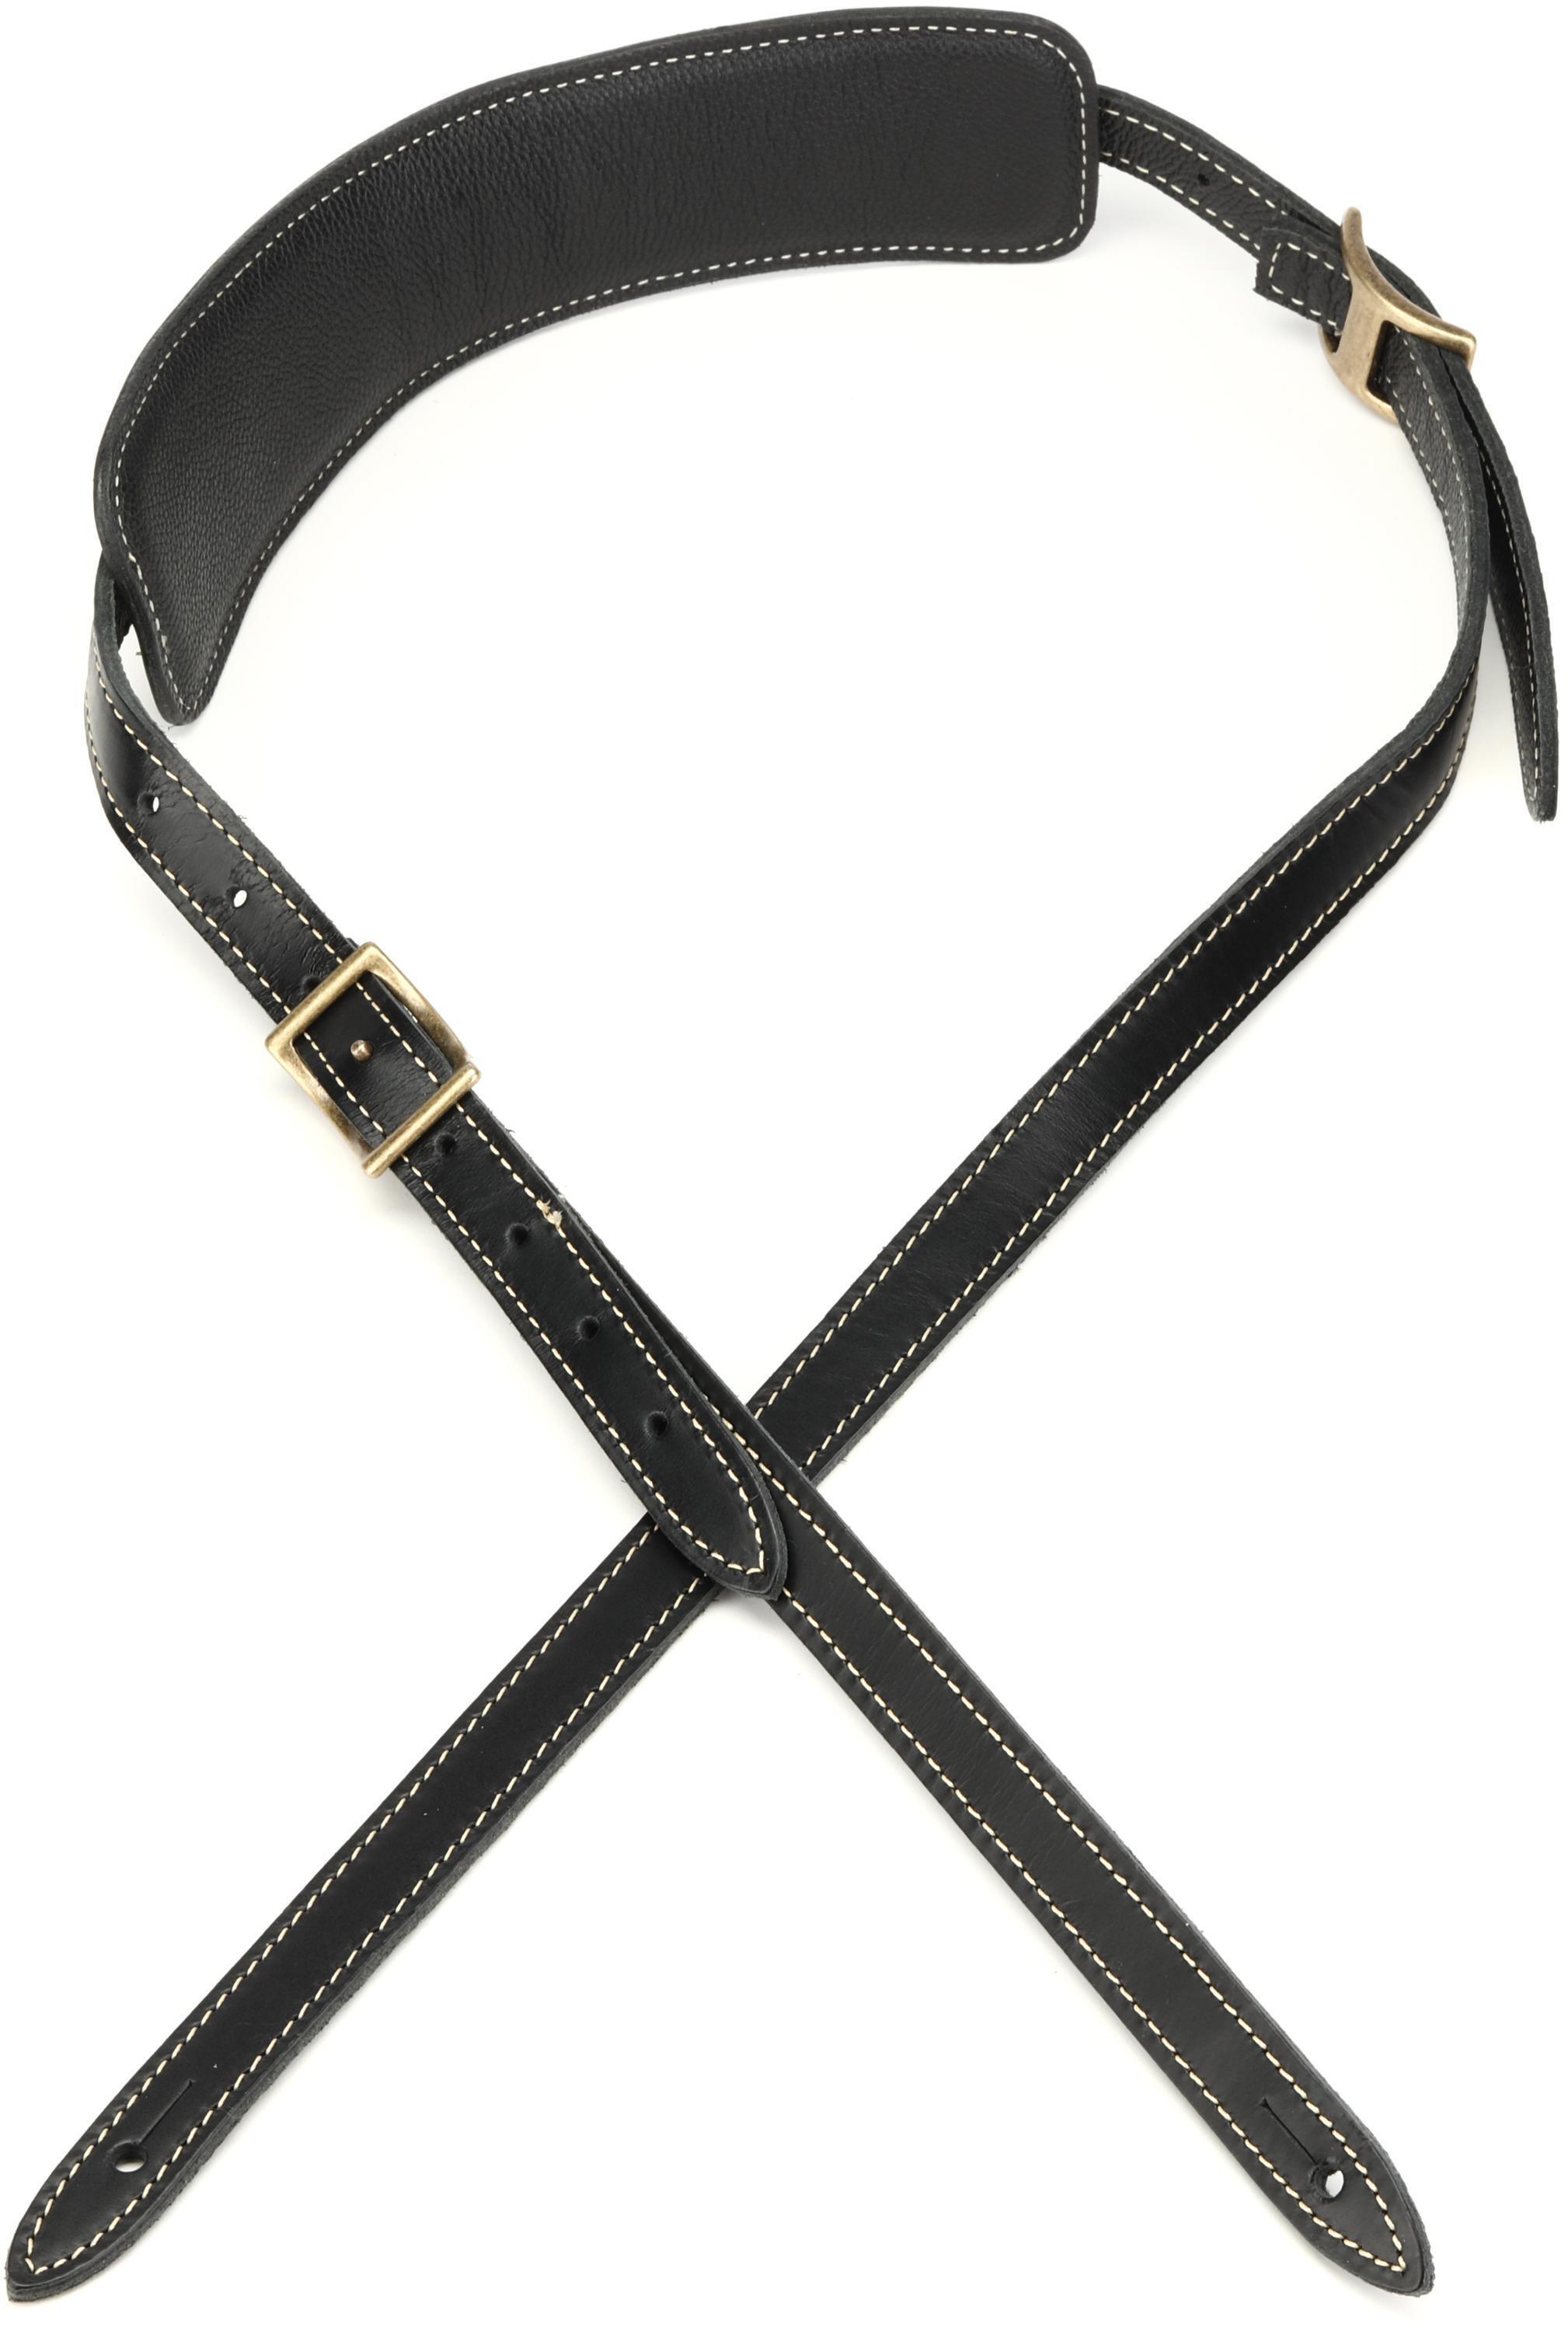 Guitar Strap Button Black - bulk in zip bag, Set of 2